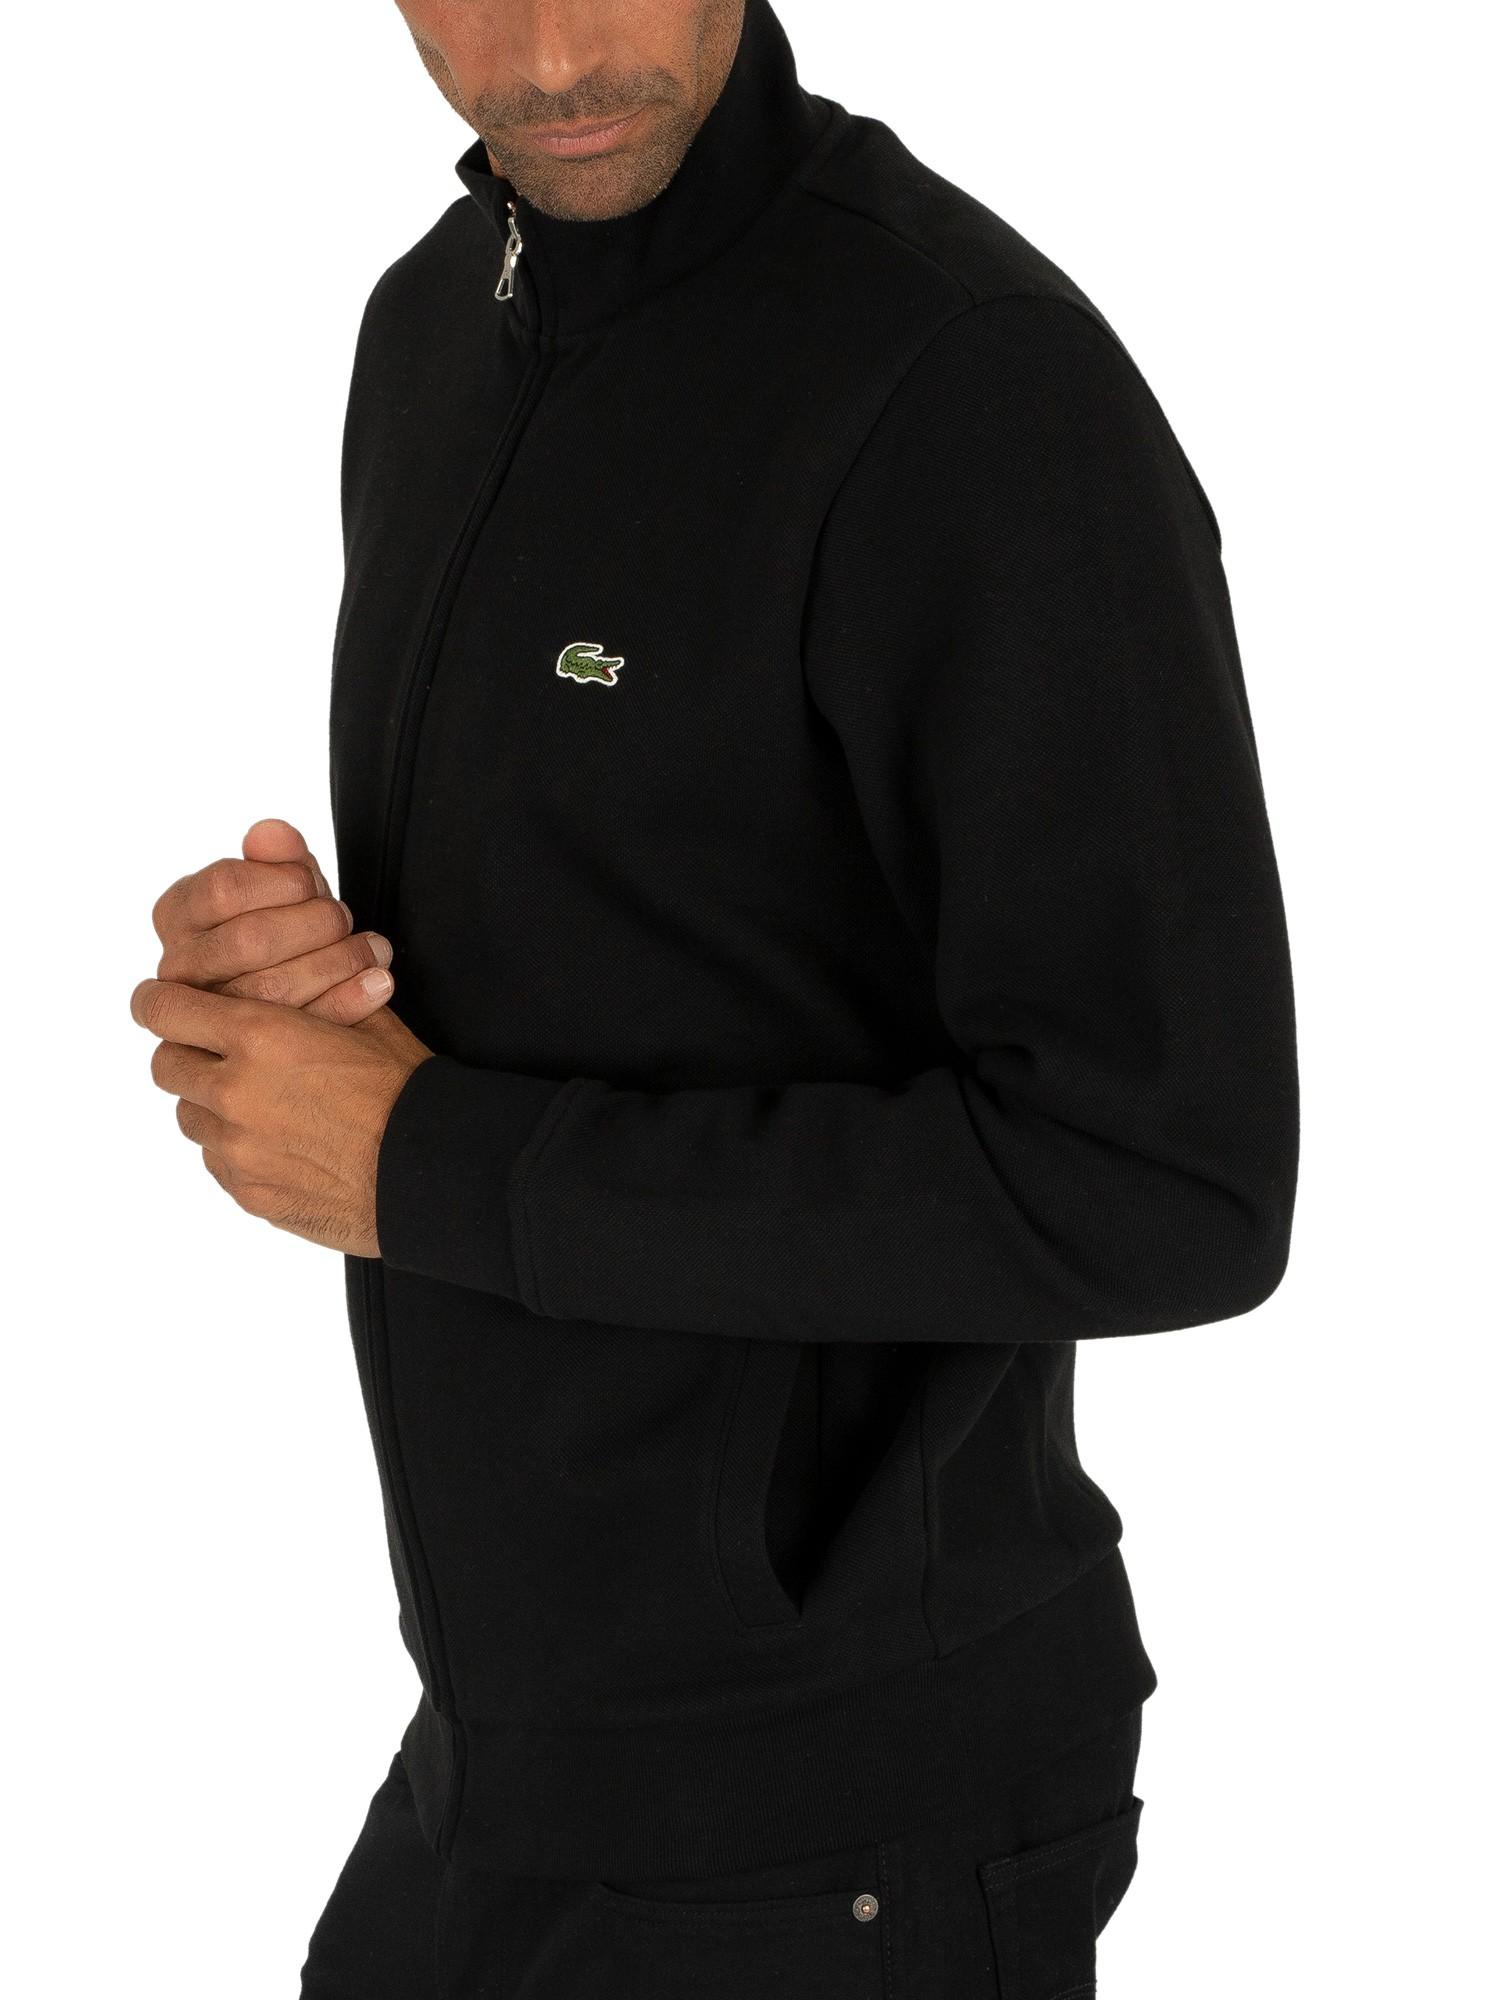 Lacoste Zip Track Jacket in Black for Men - Lyst